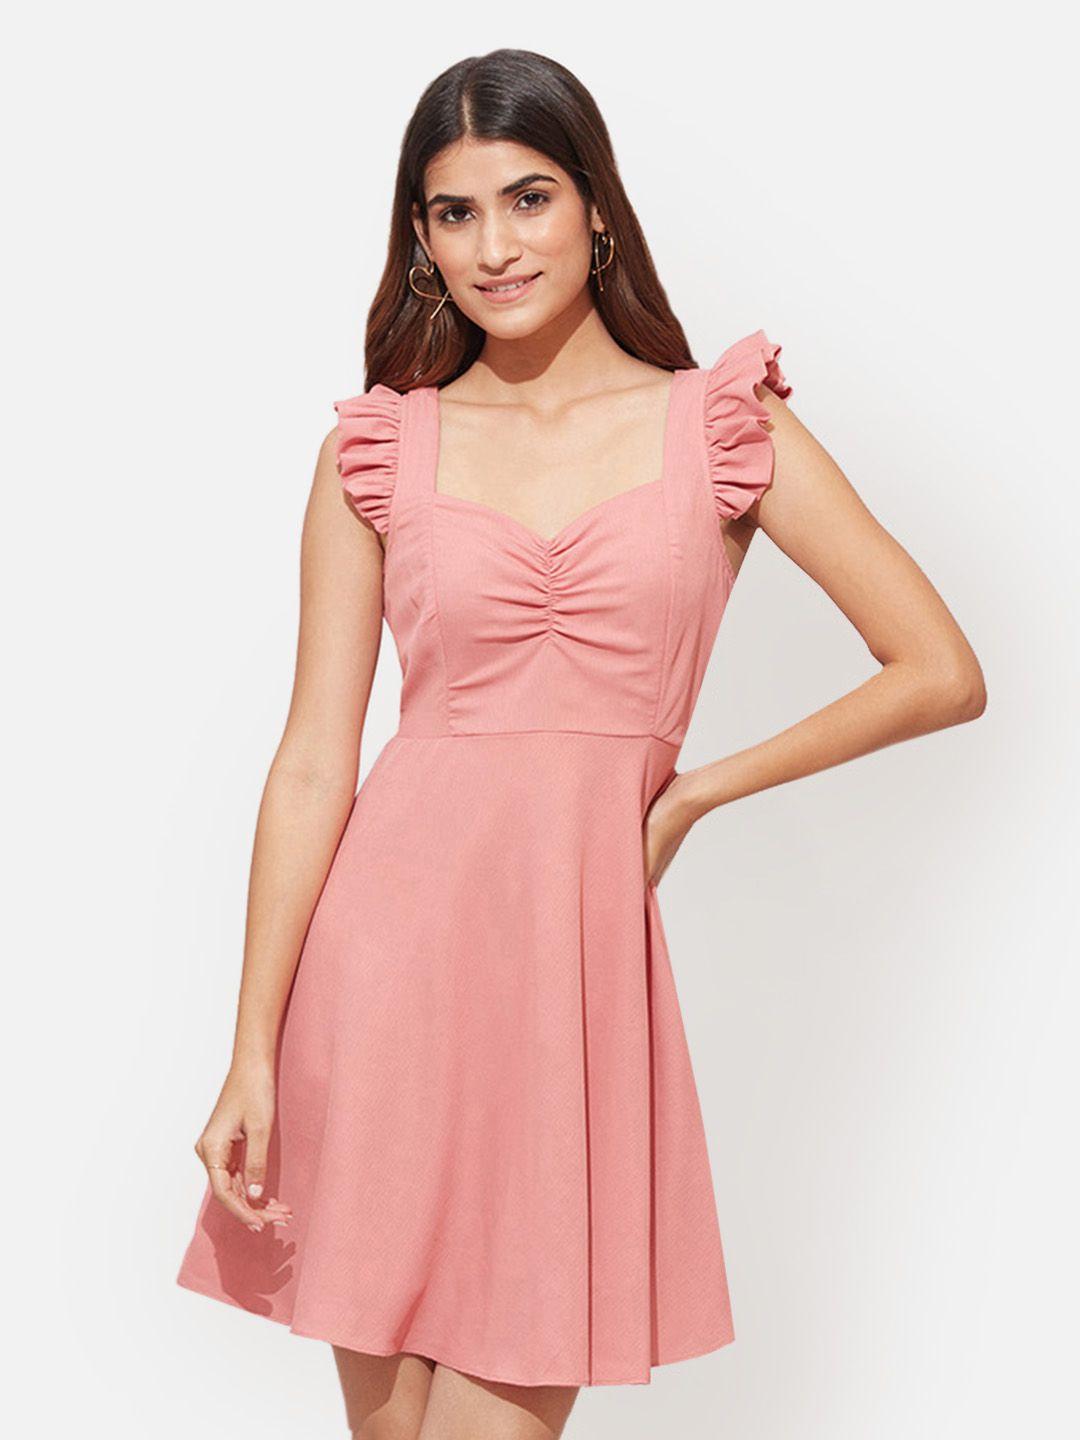 20dresses women pink fit & flare dress